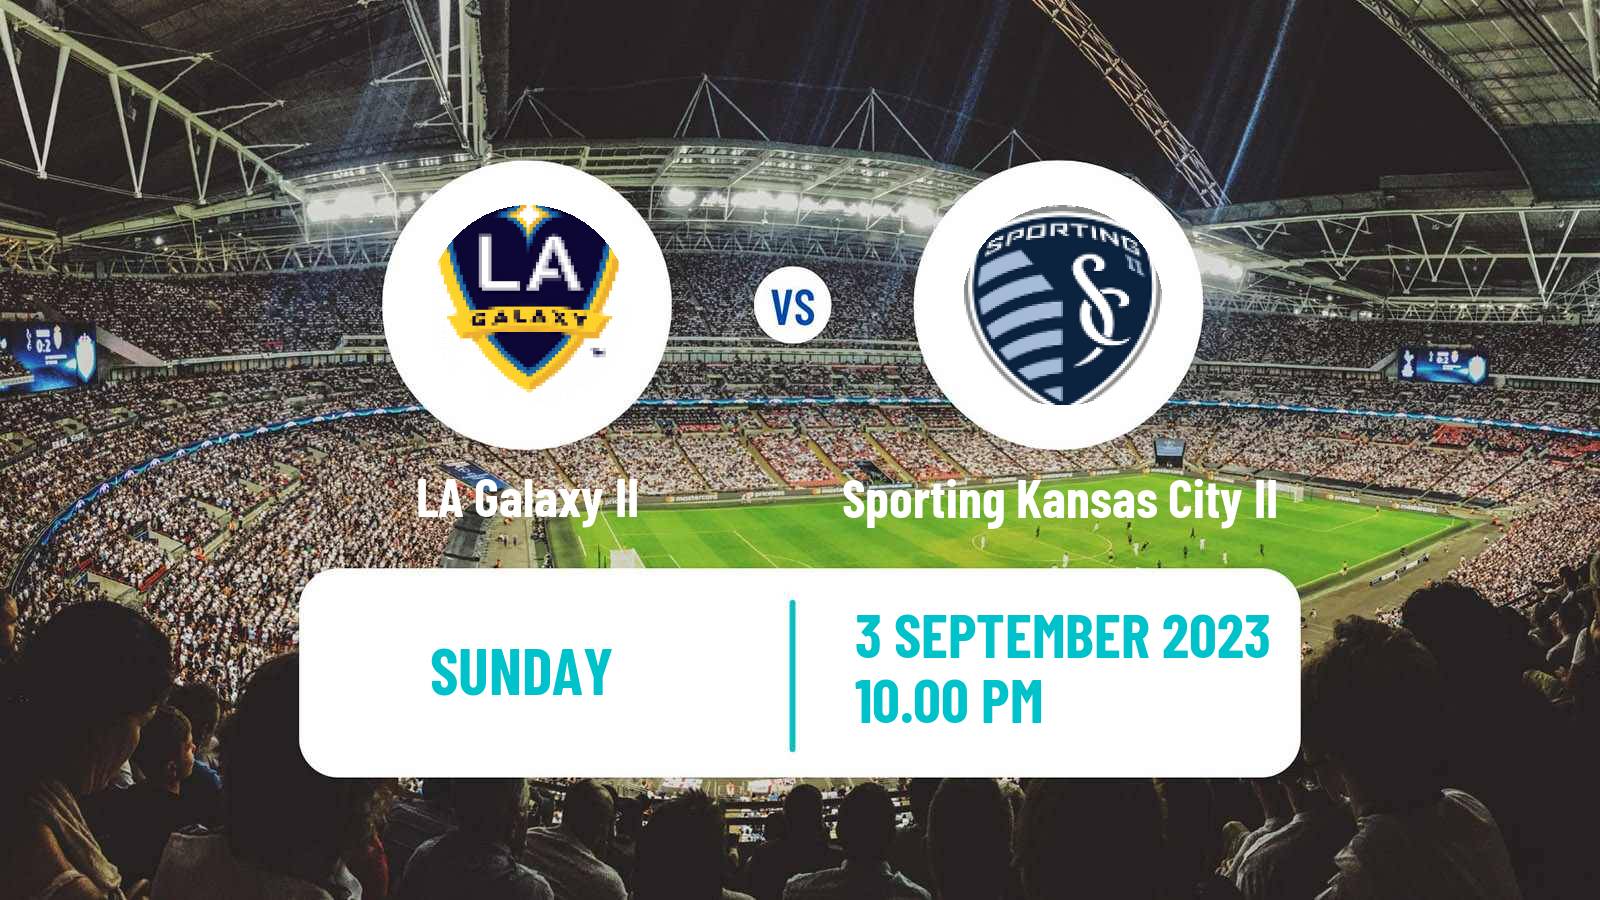 Soccer MLS Next Pro LA Galaxy II - Sporting Kansas City II